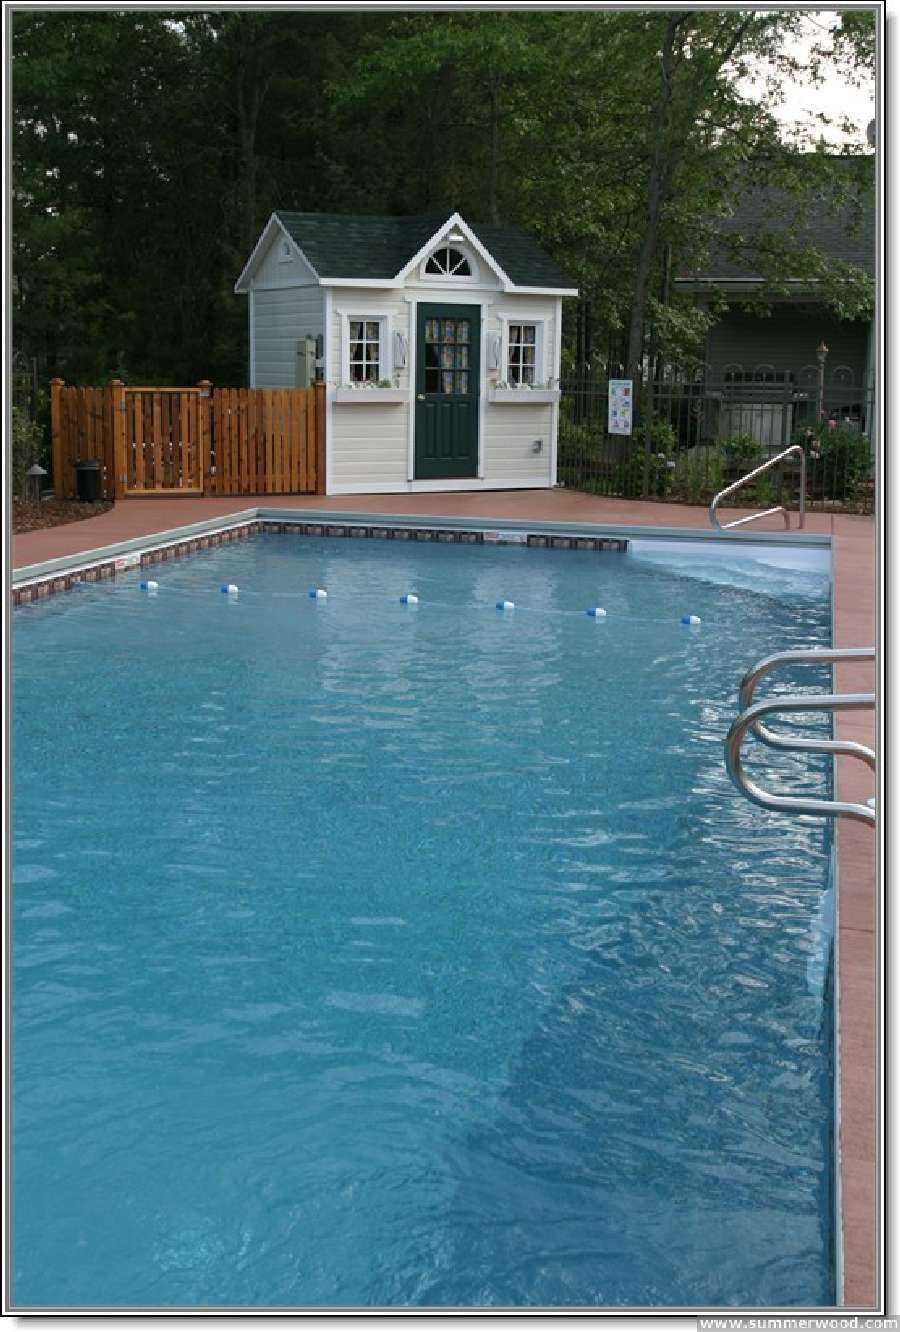 Palmerston pool cabana plans